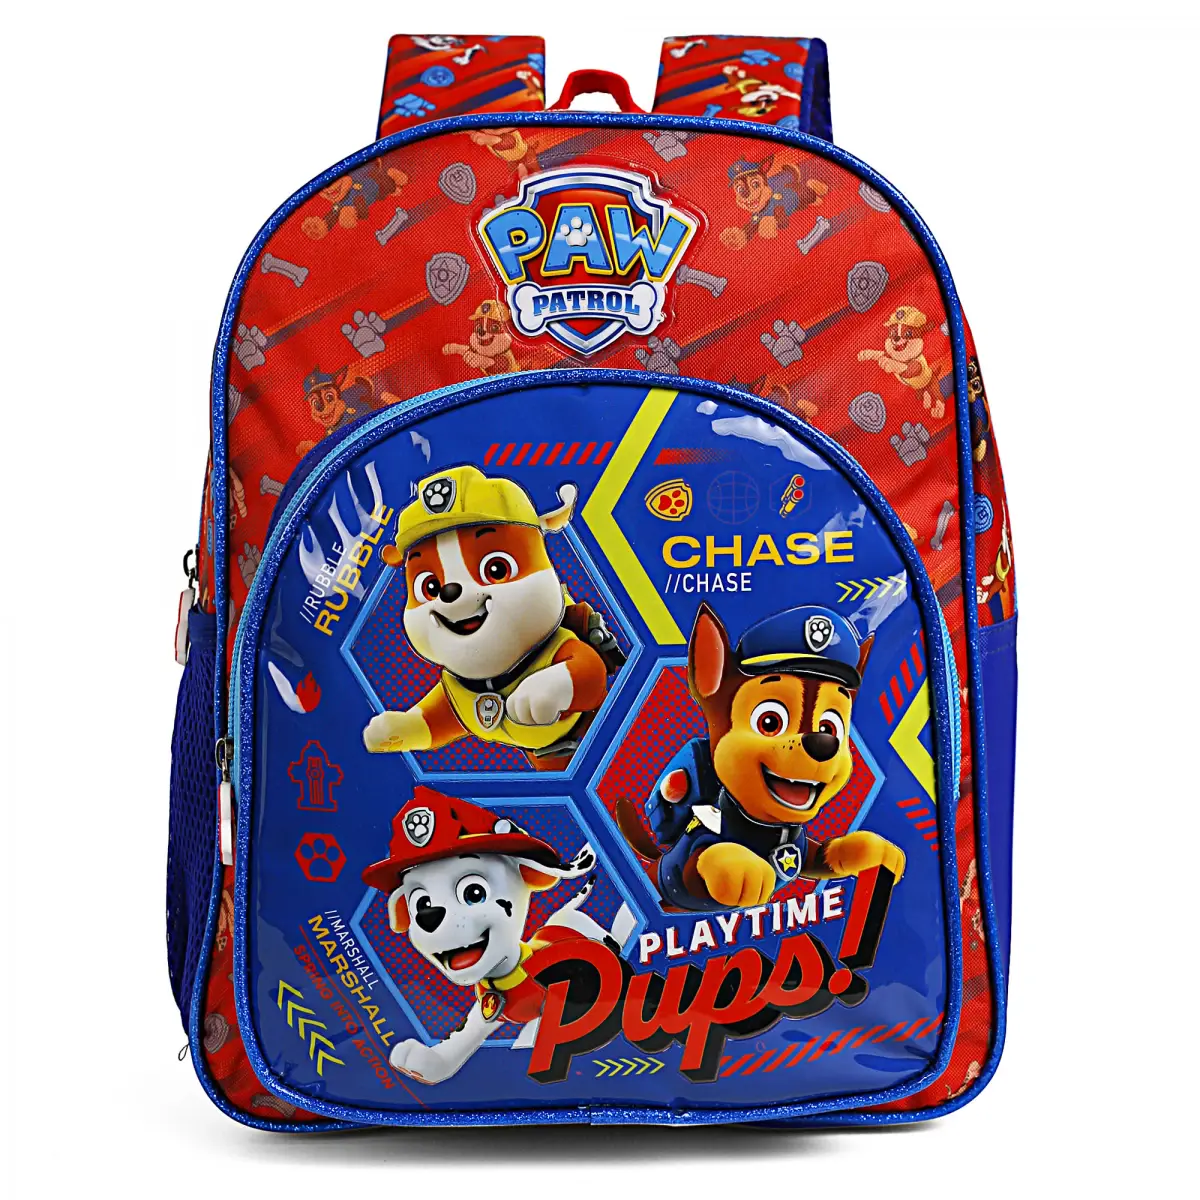 Striders Paw Patrol Chase School Bags 41cm Cartoon Character Backpack ...